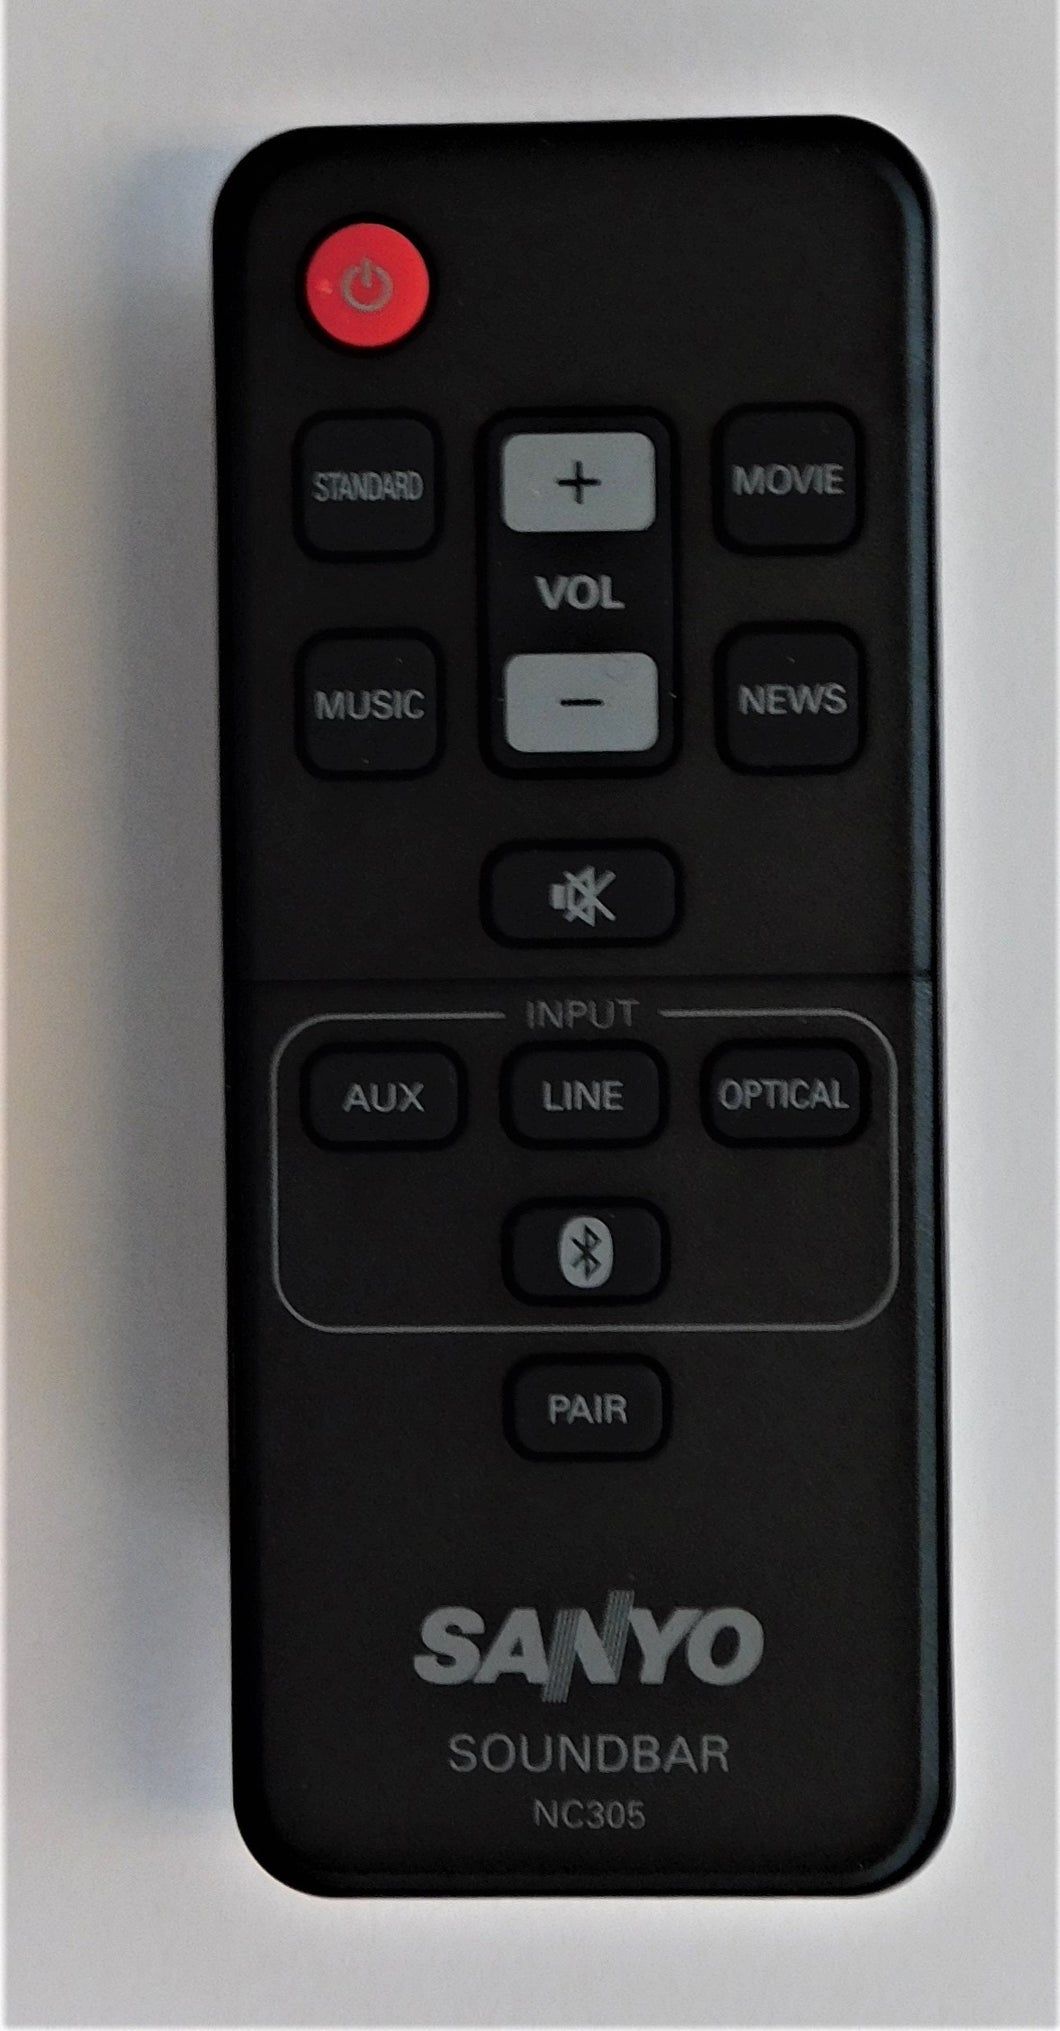 OEM replacement remote control for Sanyo Soundbar NC305UH